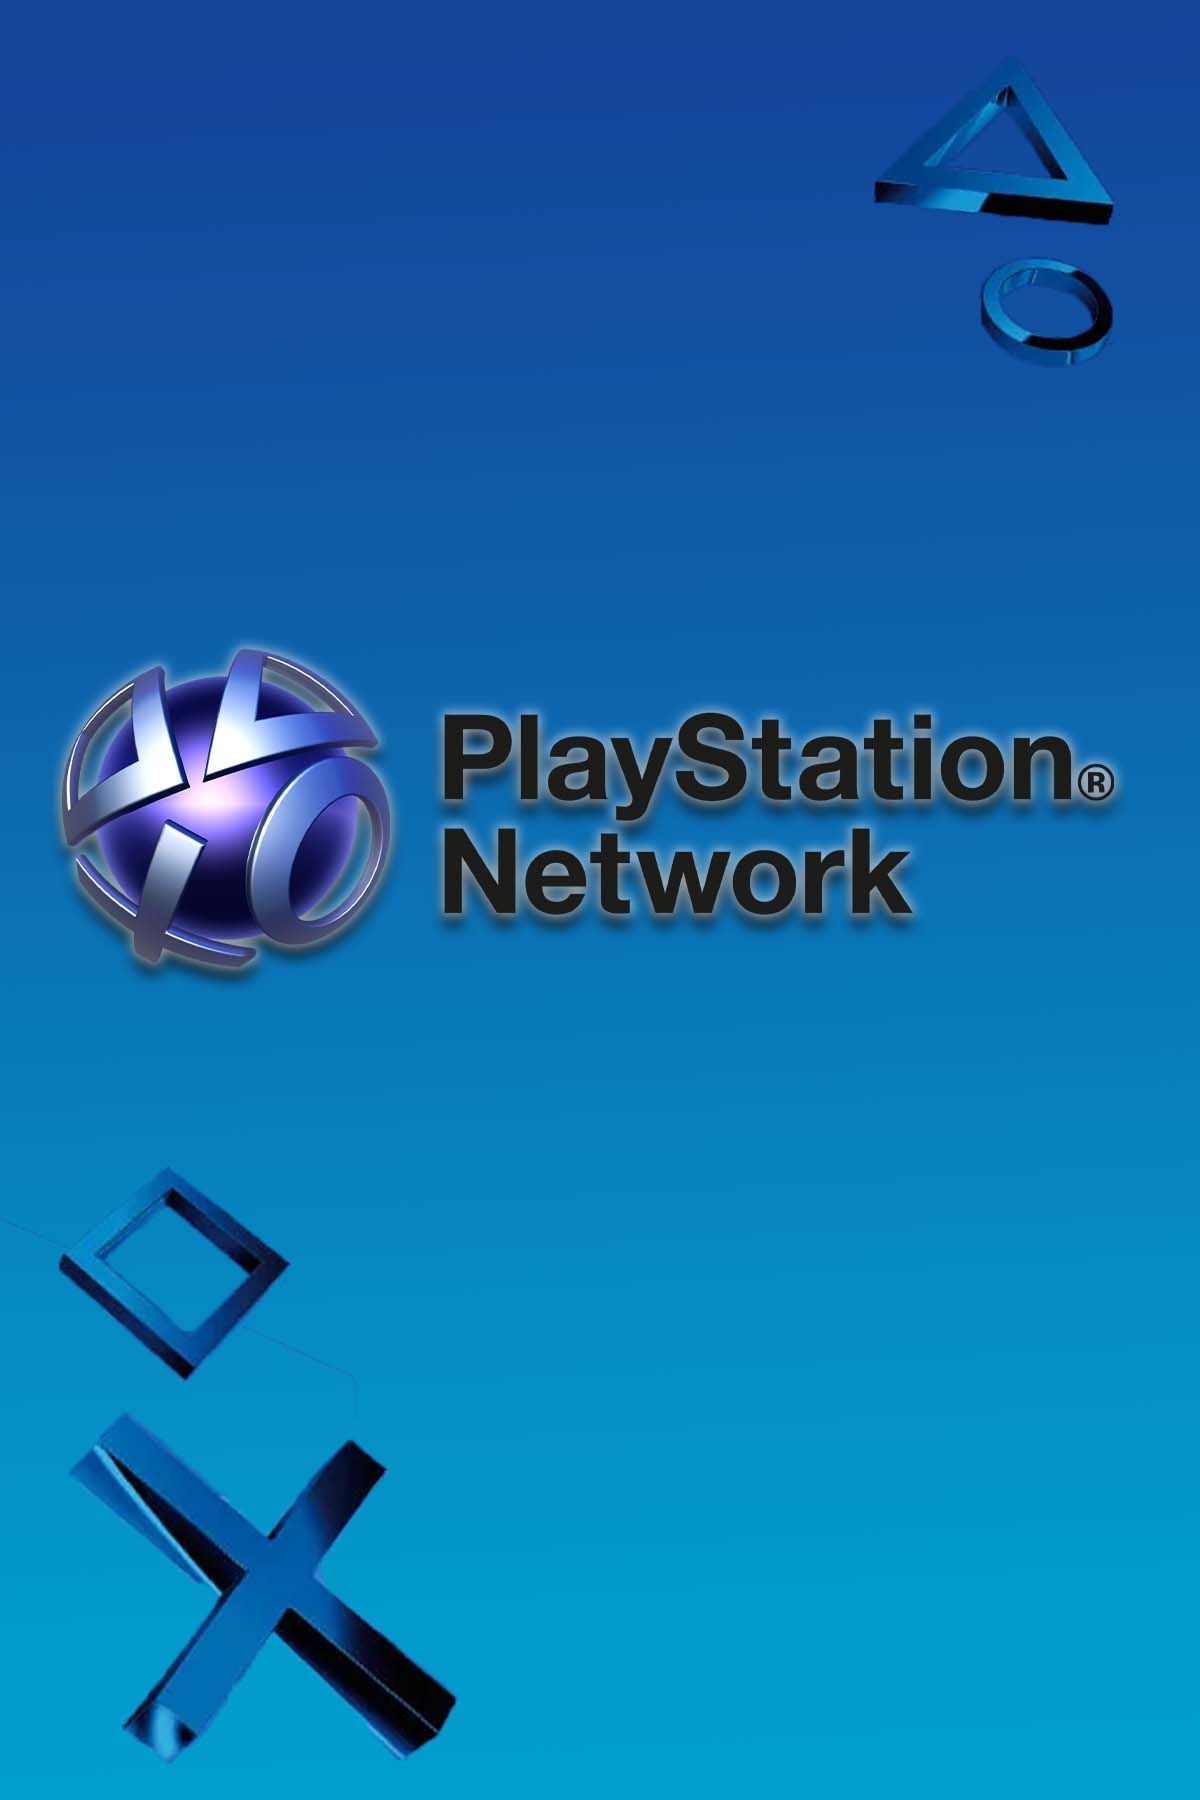 PlaystationNetworkTagPageHeader